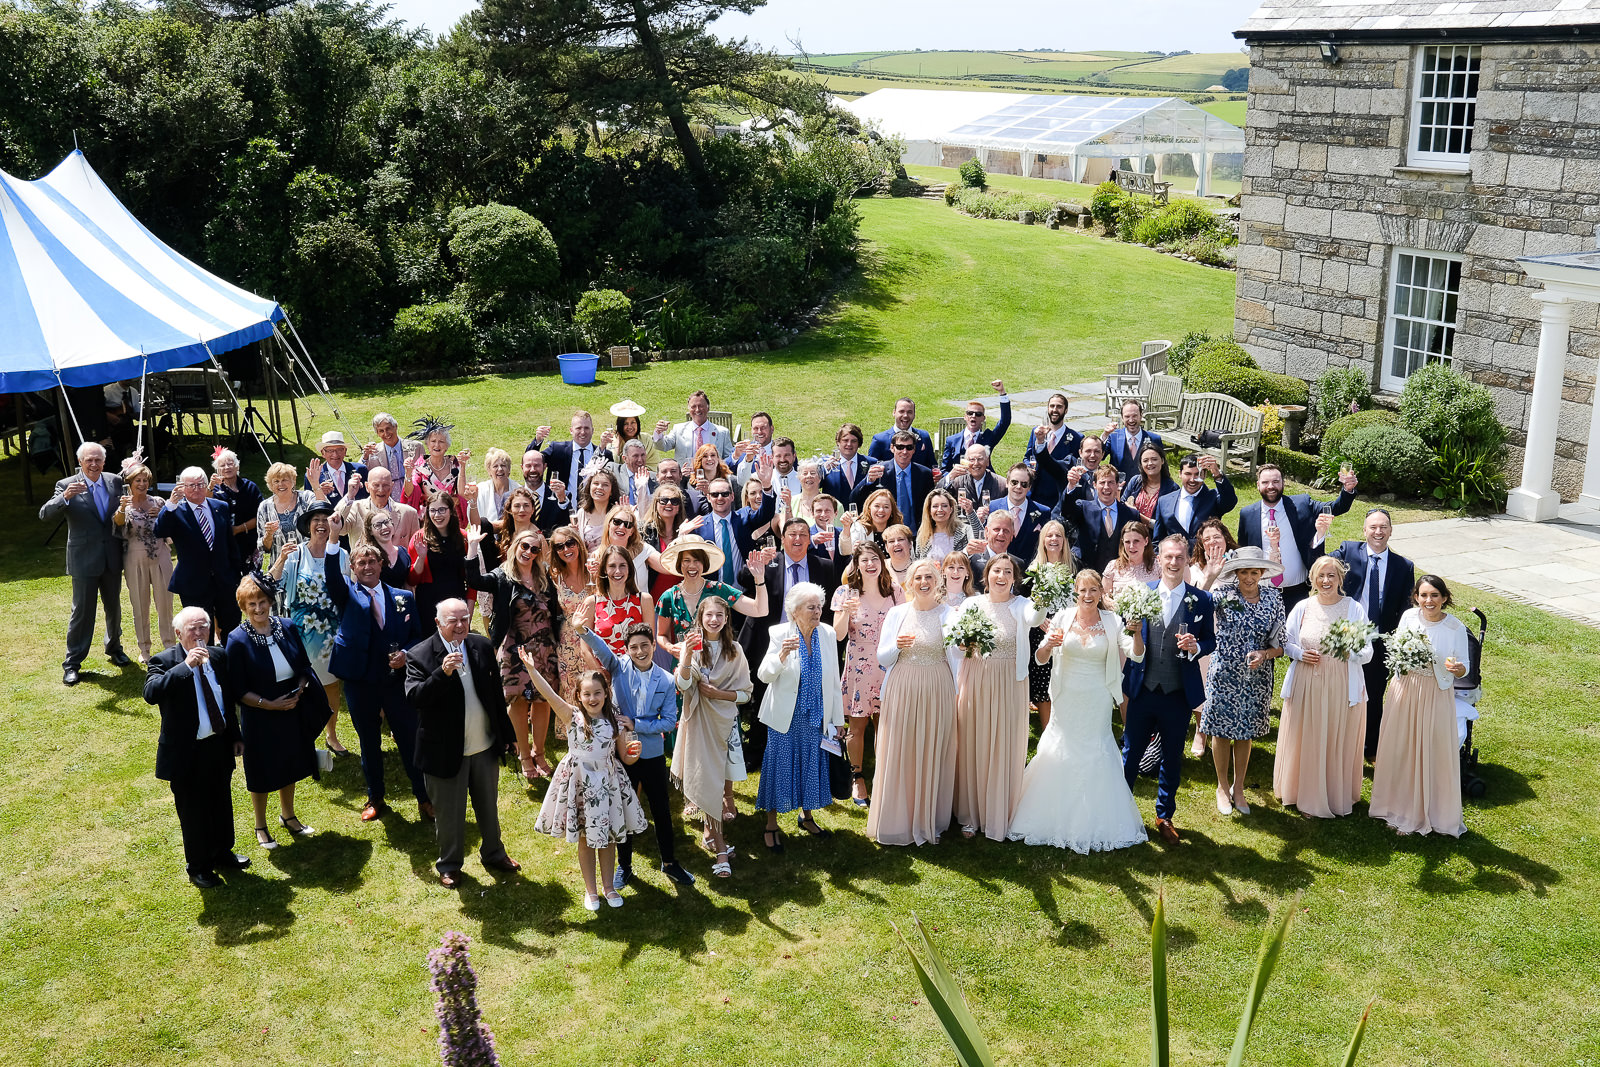 Roscarrock Farm wedding in Cornwall 046.jpg